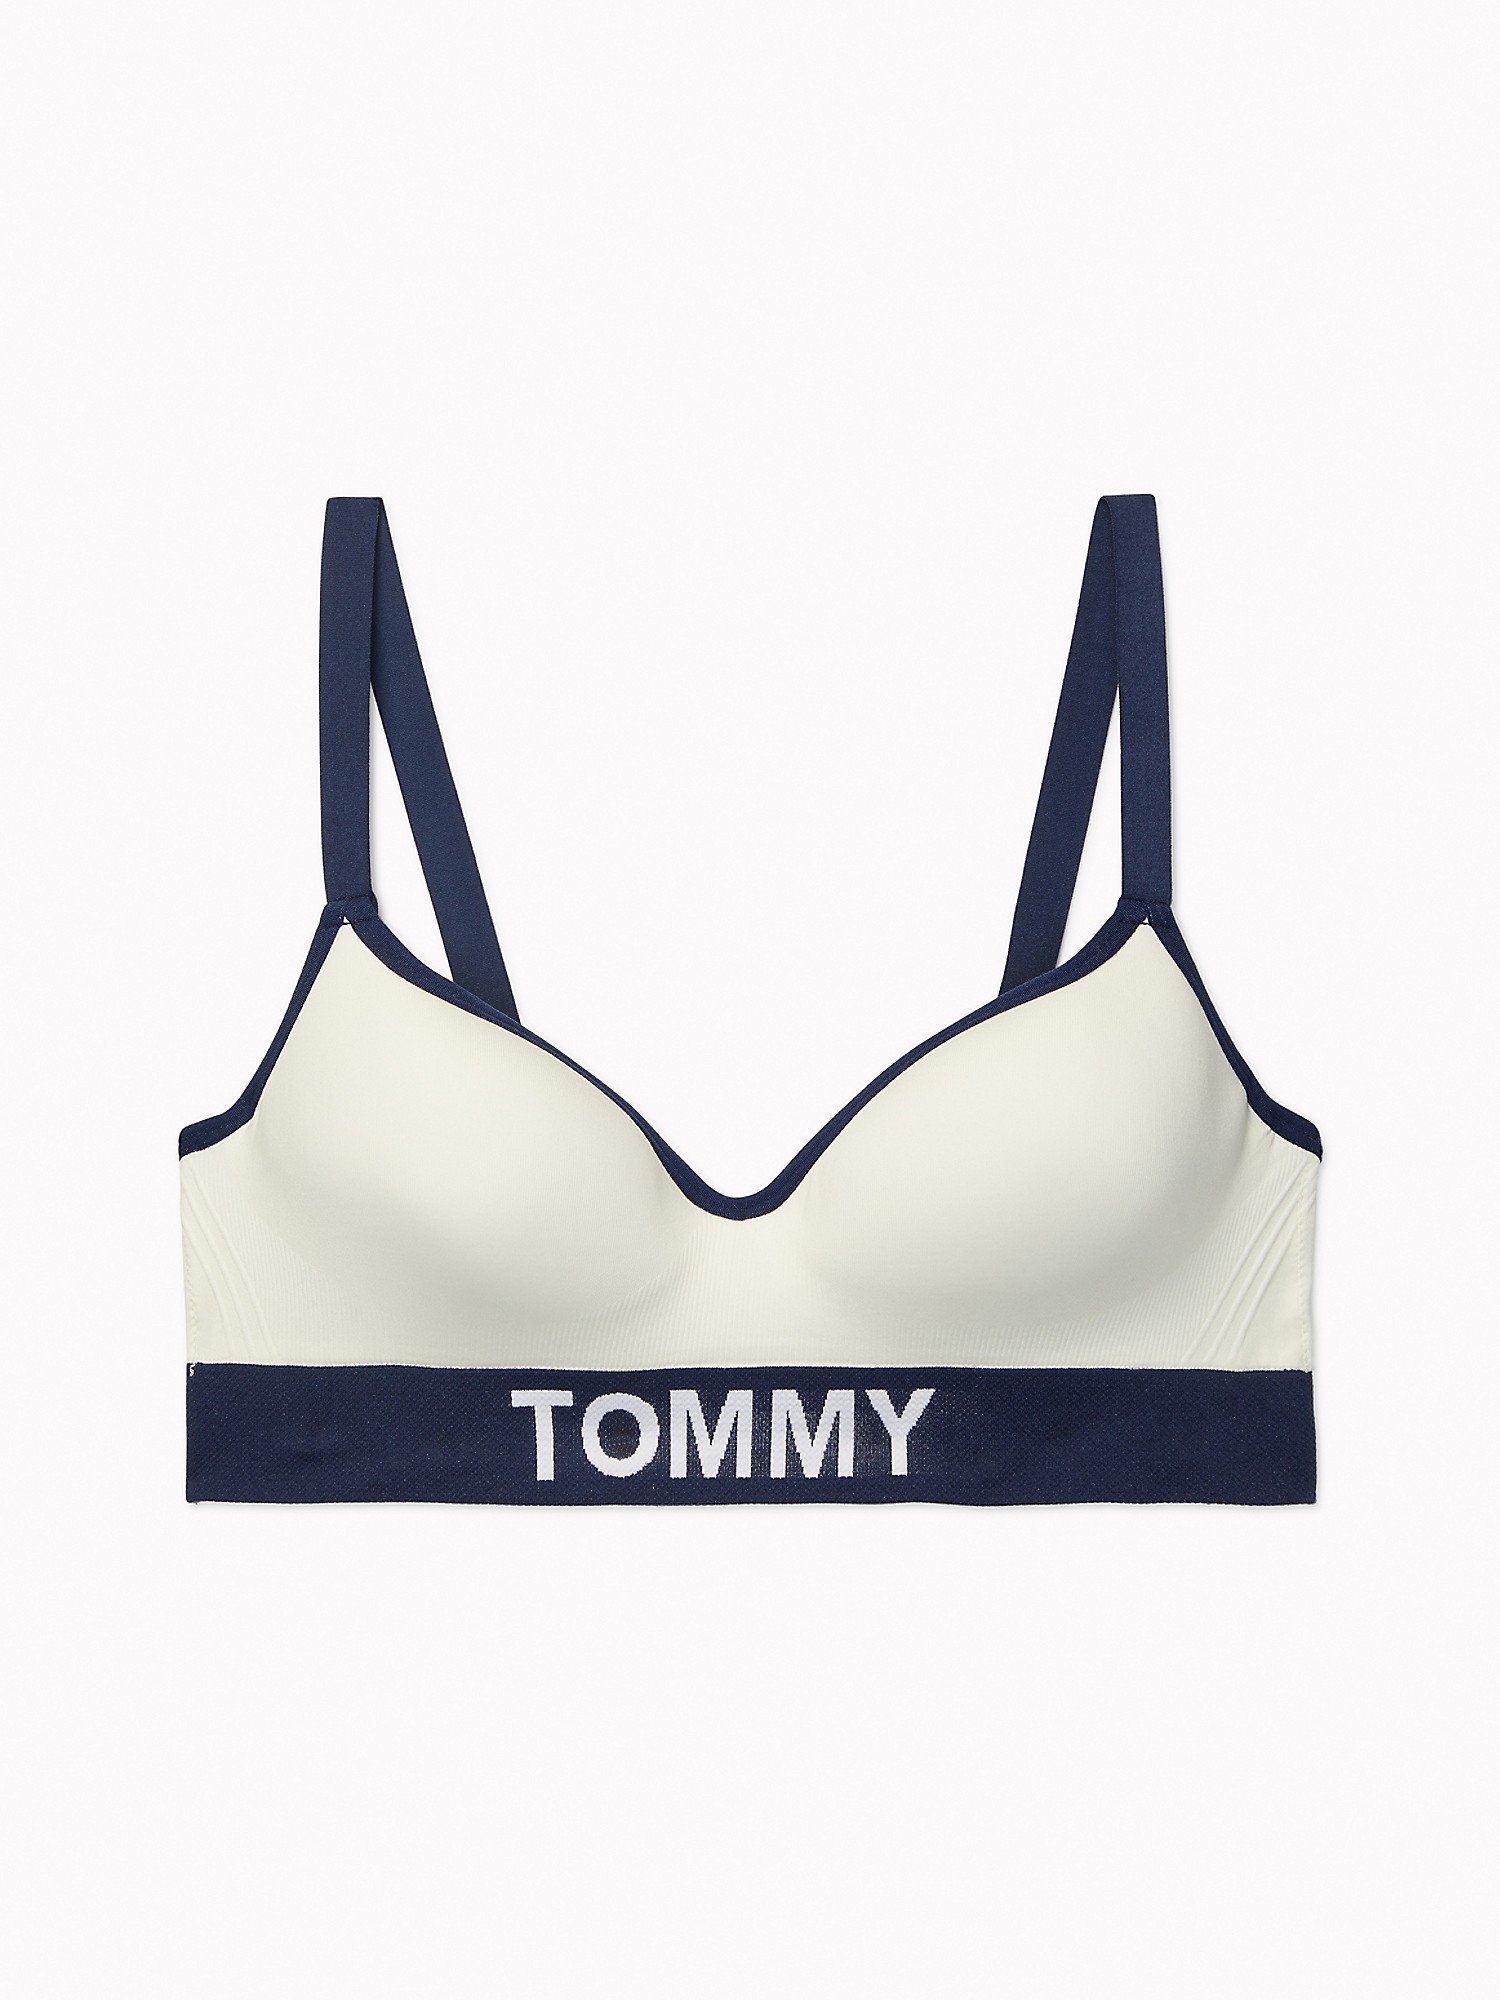 Tommy Hilfiger Logo Sporty Retro Seamless Lounge Bralette